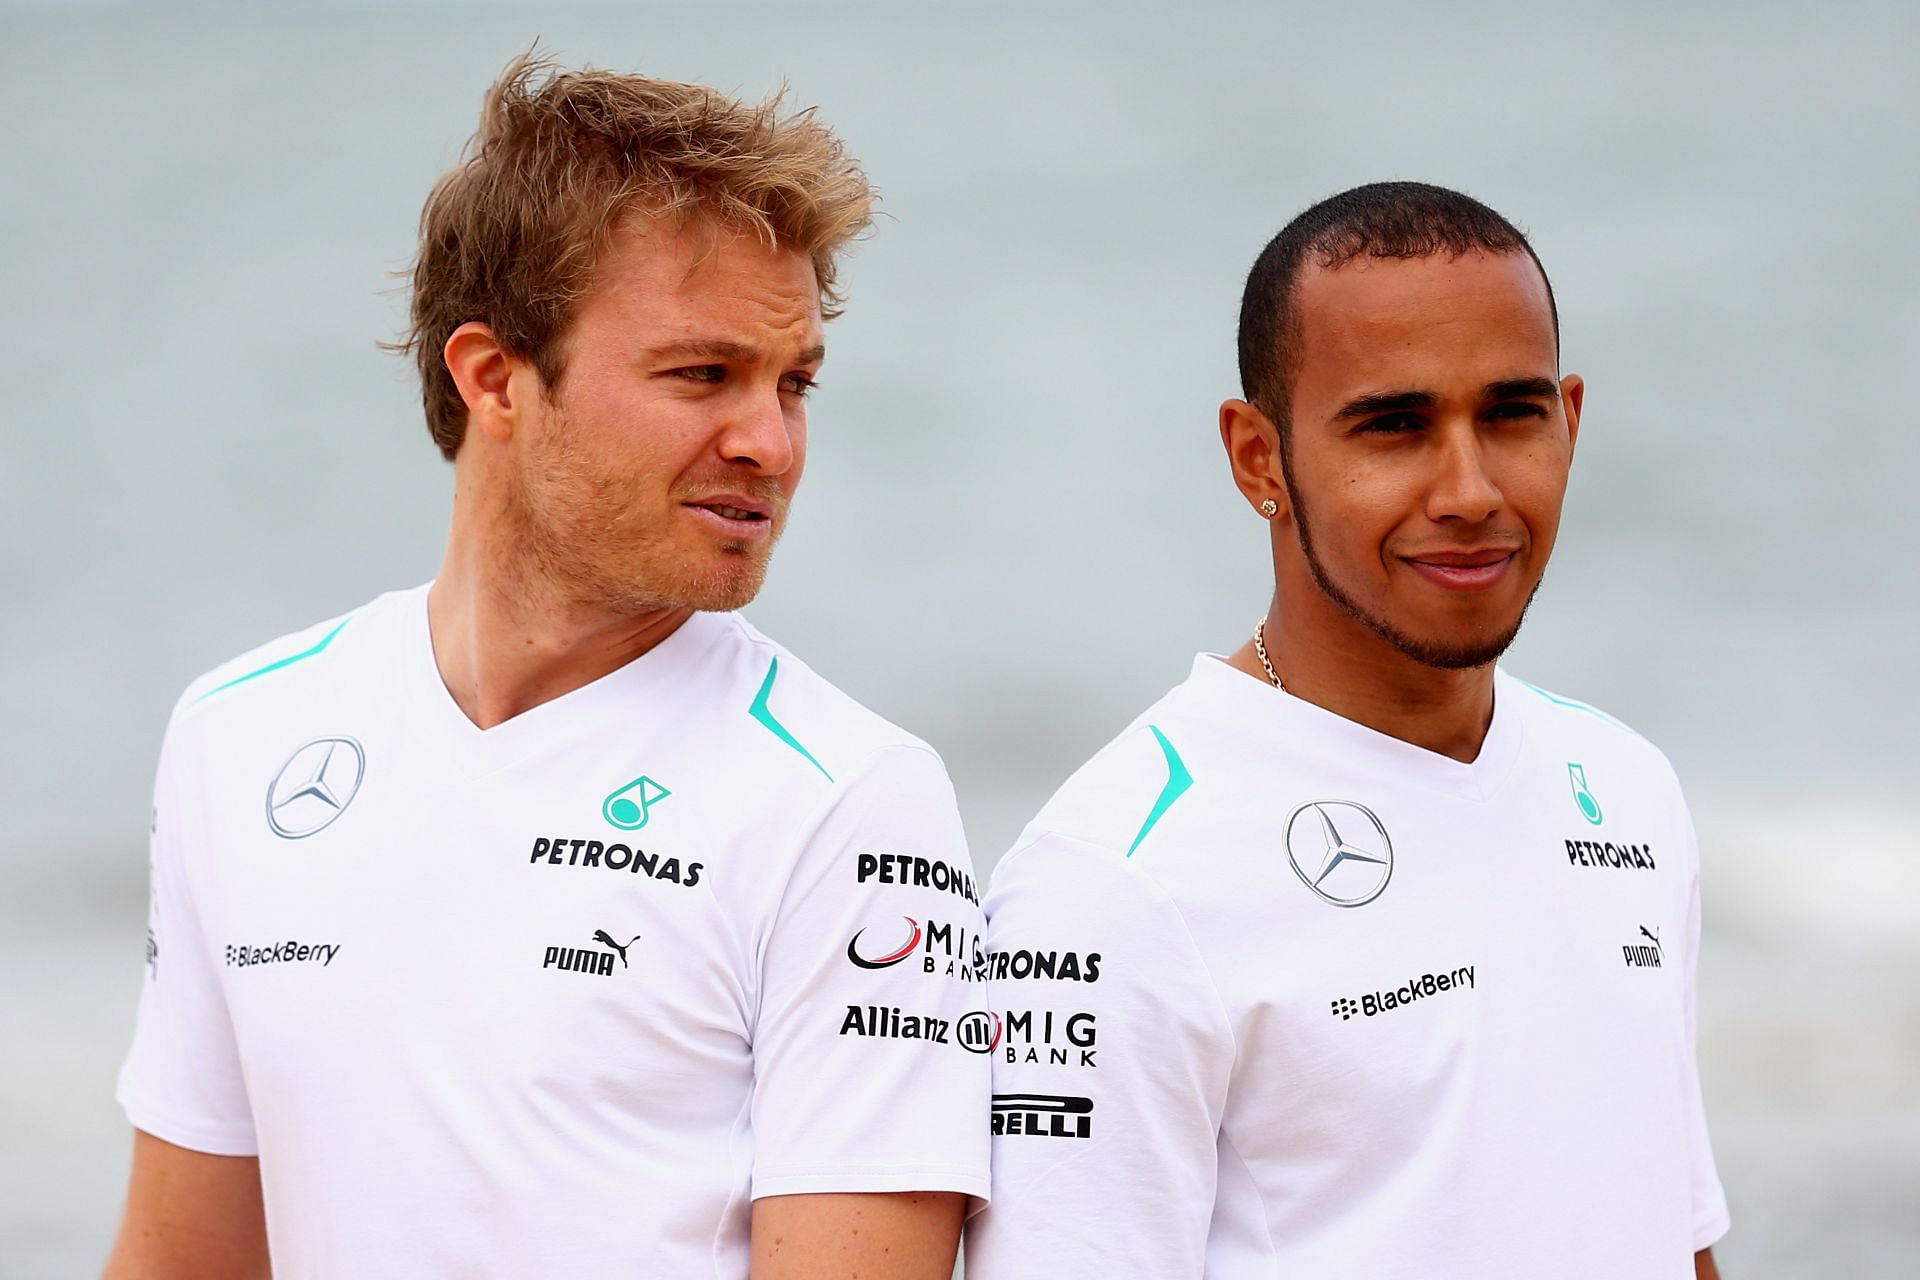 Nico Rosberg (left) and Lewis Hamilton (right) ahead of the 2013 Australian Grand Prix